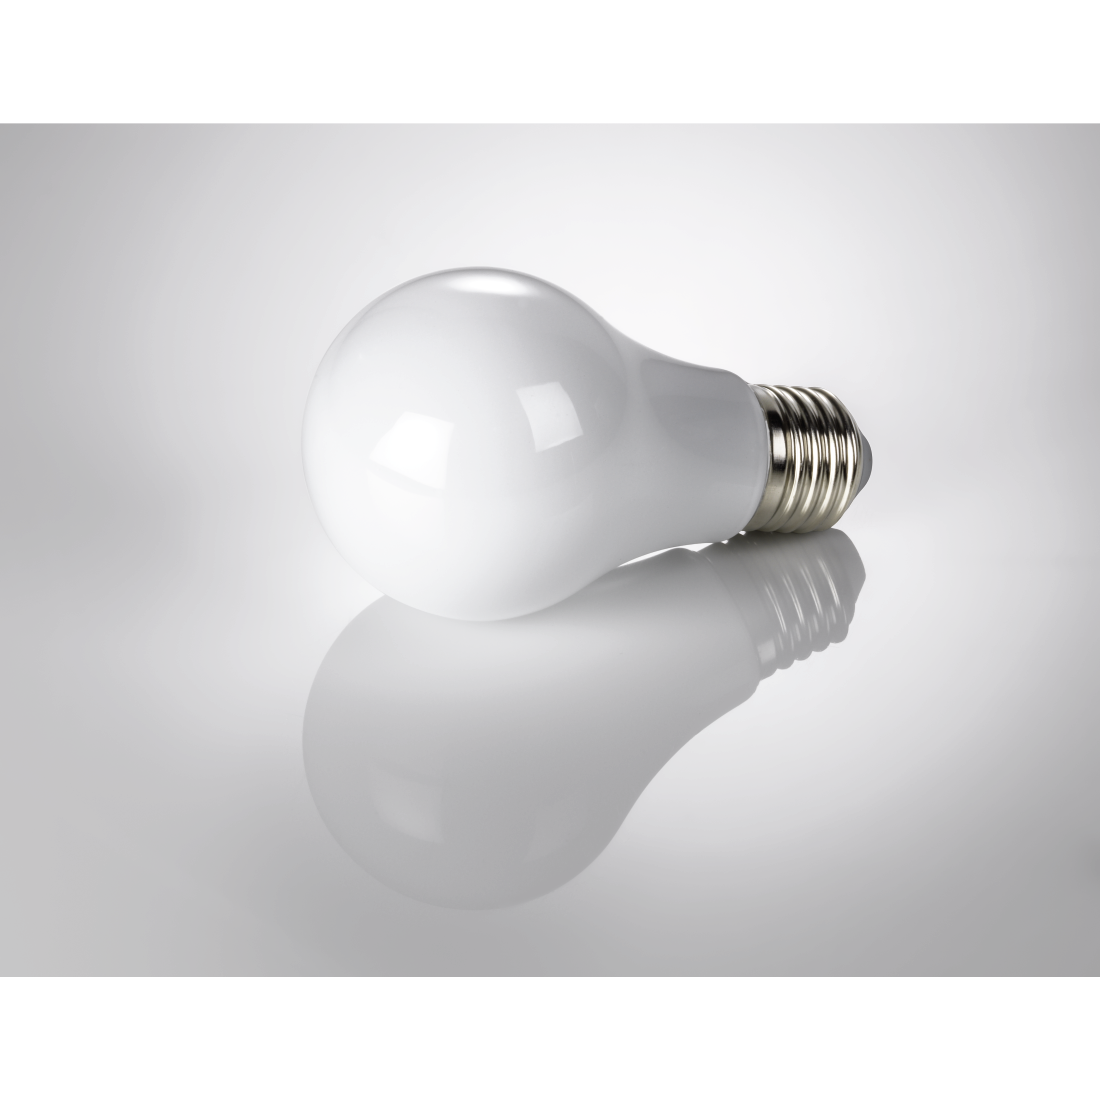 abx3 High-Res Image 3 - Xavax, LED Bulb, E27, 630lm replaces 50W Bulb, warm white, full glass